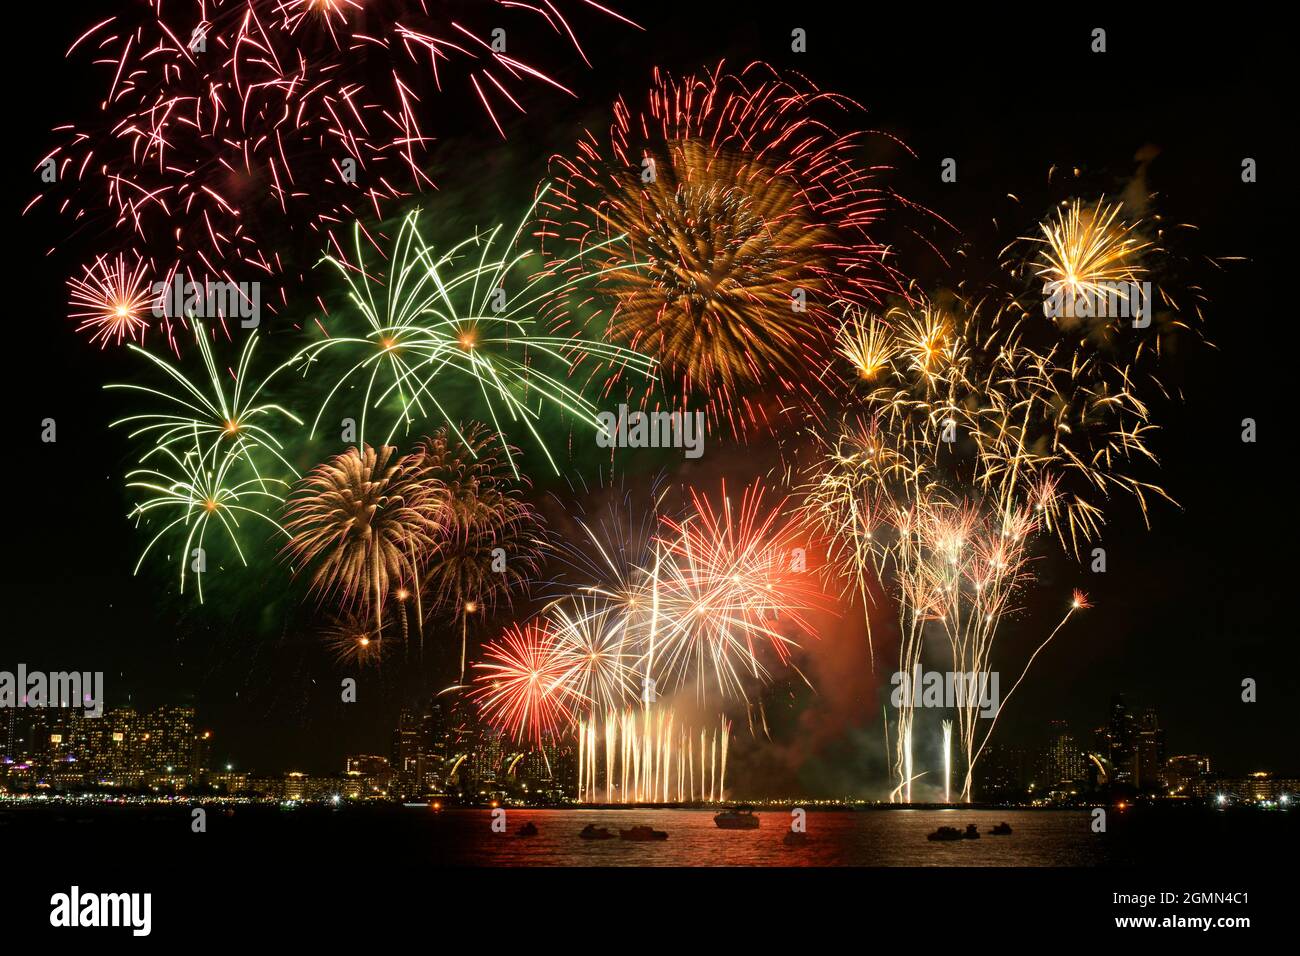 Colorful fireworks celebration and the city night light background. Fireworks festival. Stock Photo